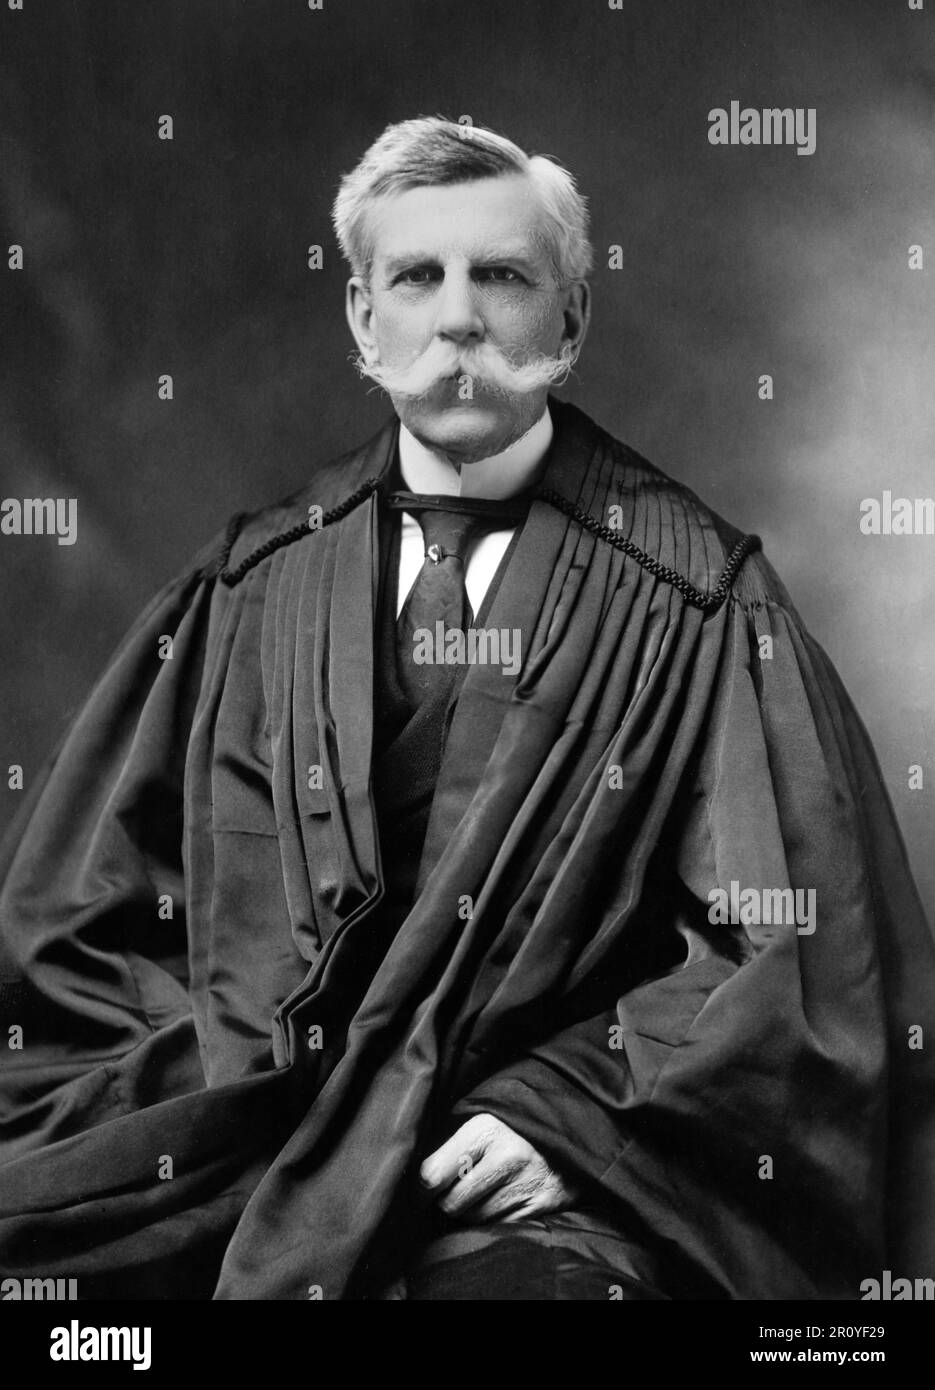 Oliver Wendell Holmes Junior. Portrait of the American Supreme Court Justice, Oliver Wendell Holmes Jr. (1841-1935) by Clinedinst Studio Stock Photo